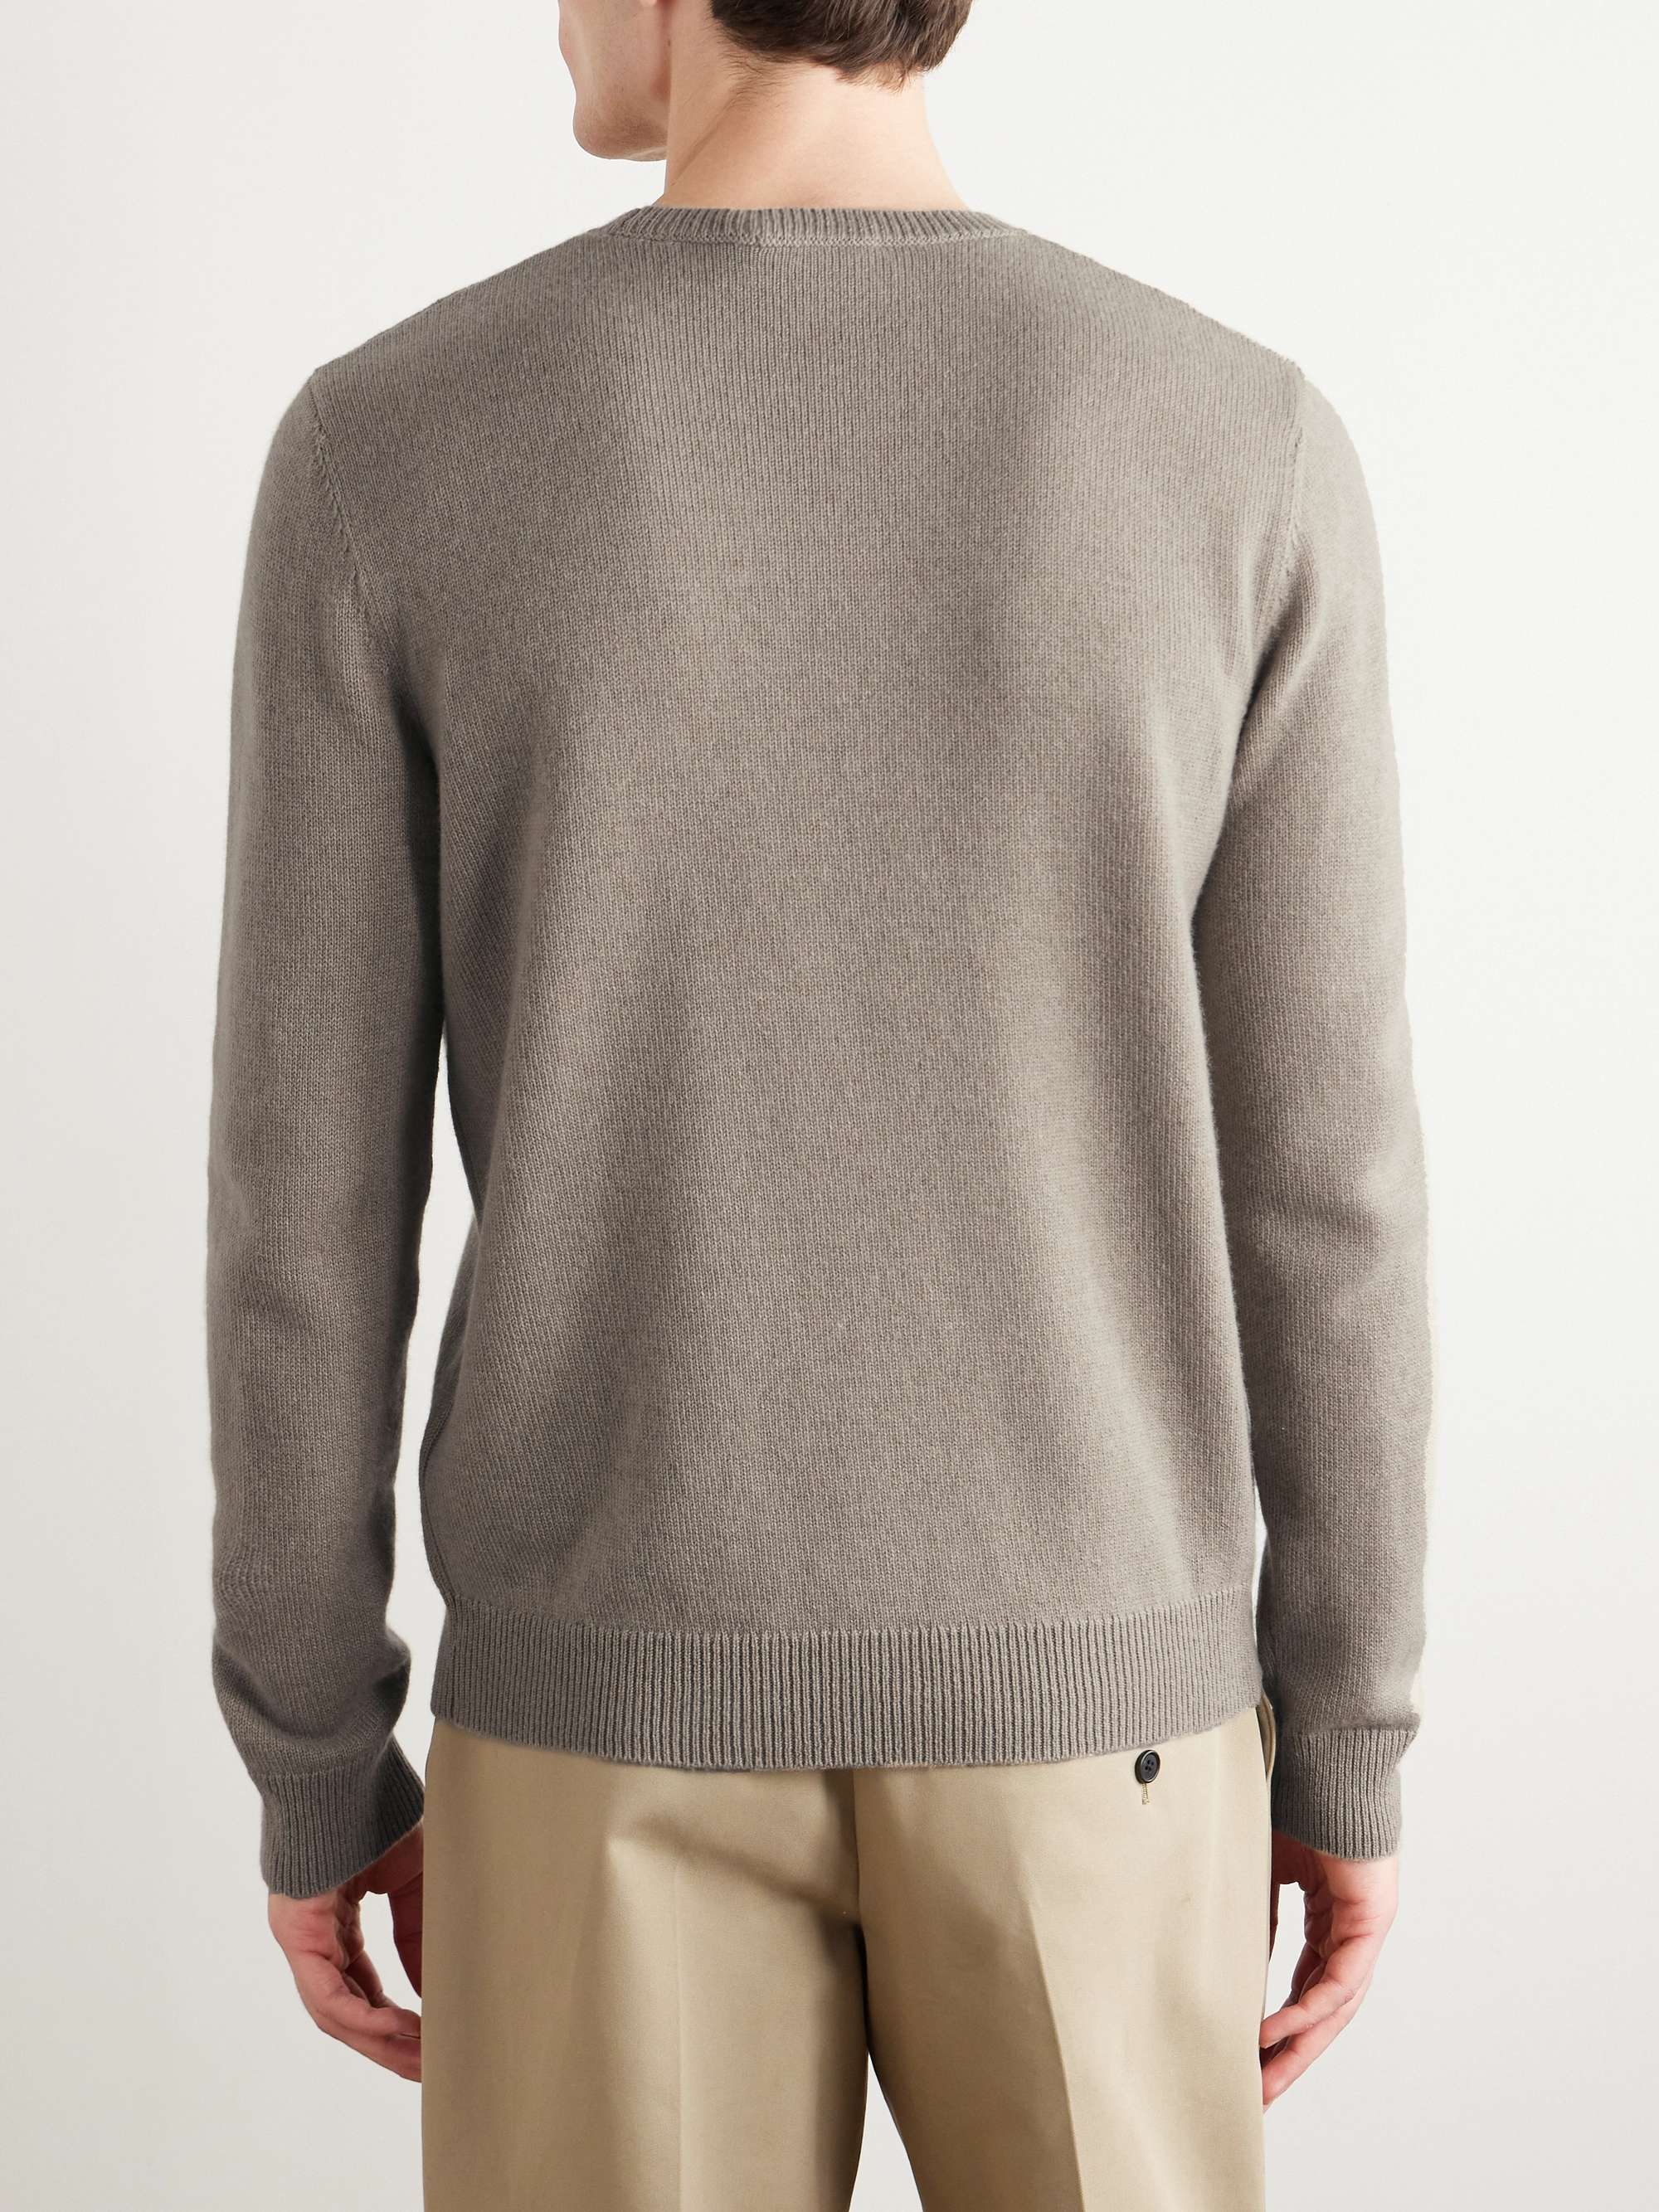 RALPH LAUREN PURPLE LABEL Appliquéd Intarsia Cashmere Sweater for Men ...